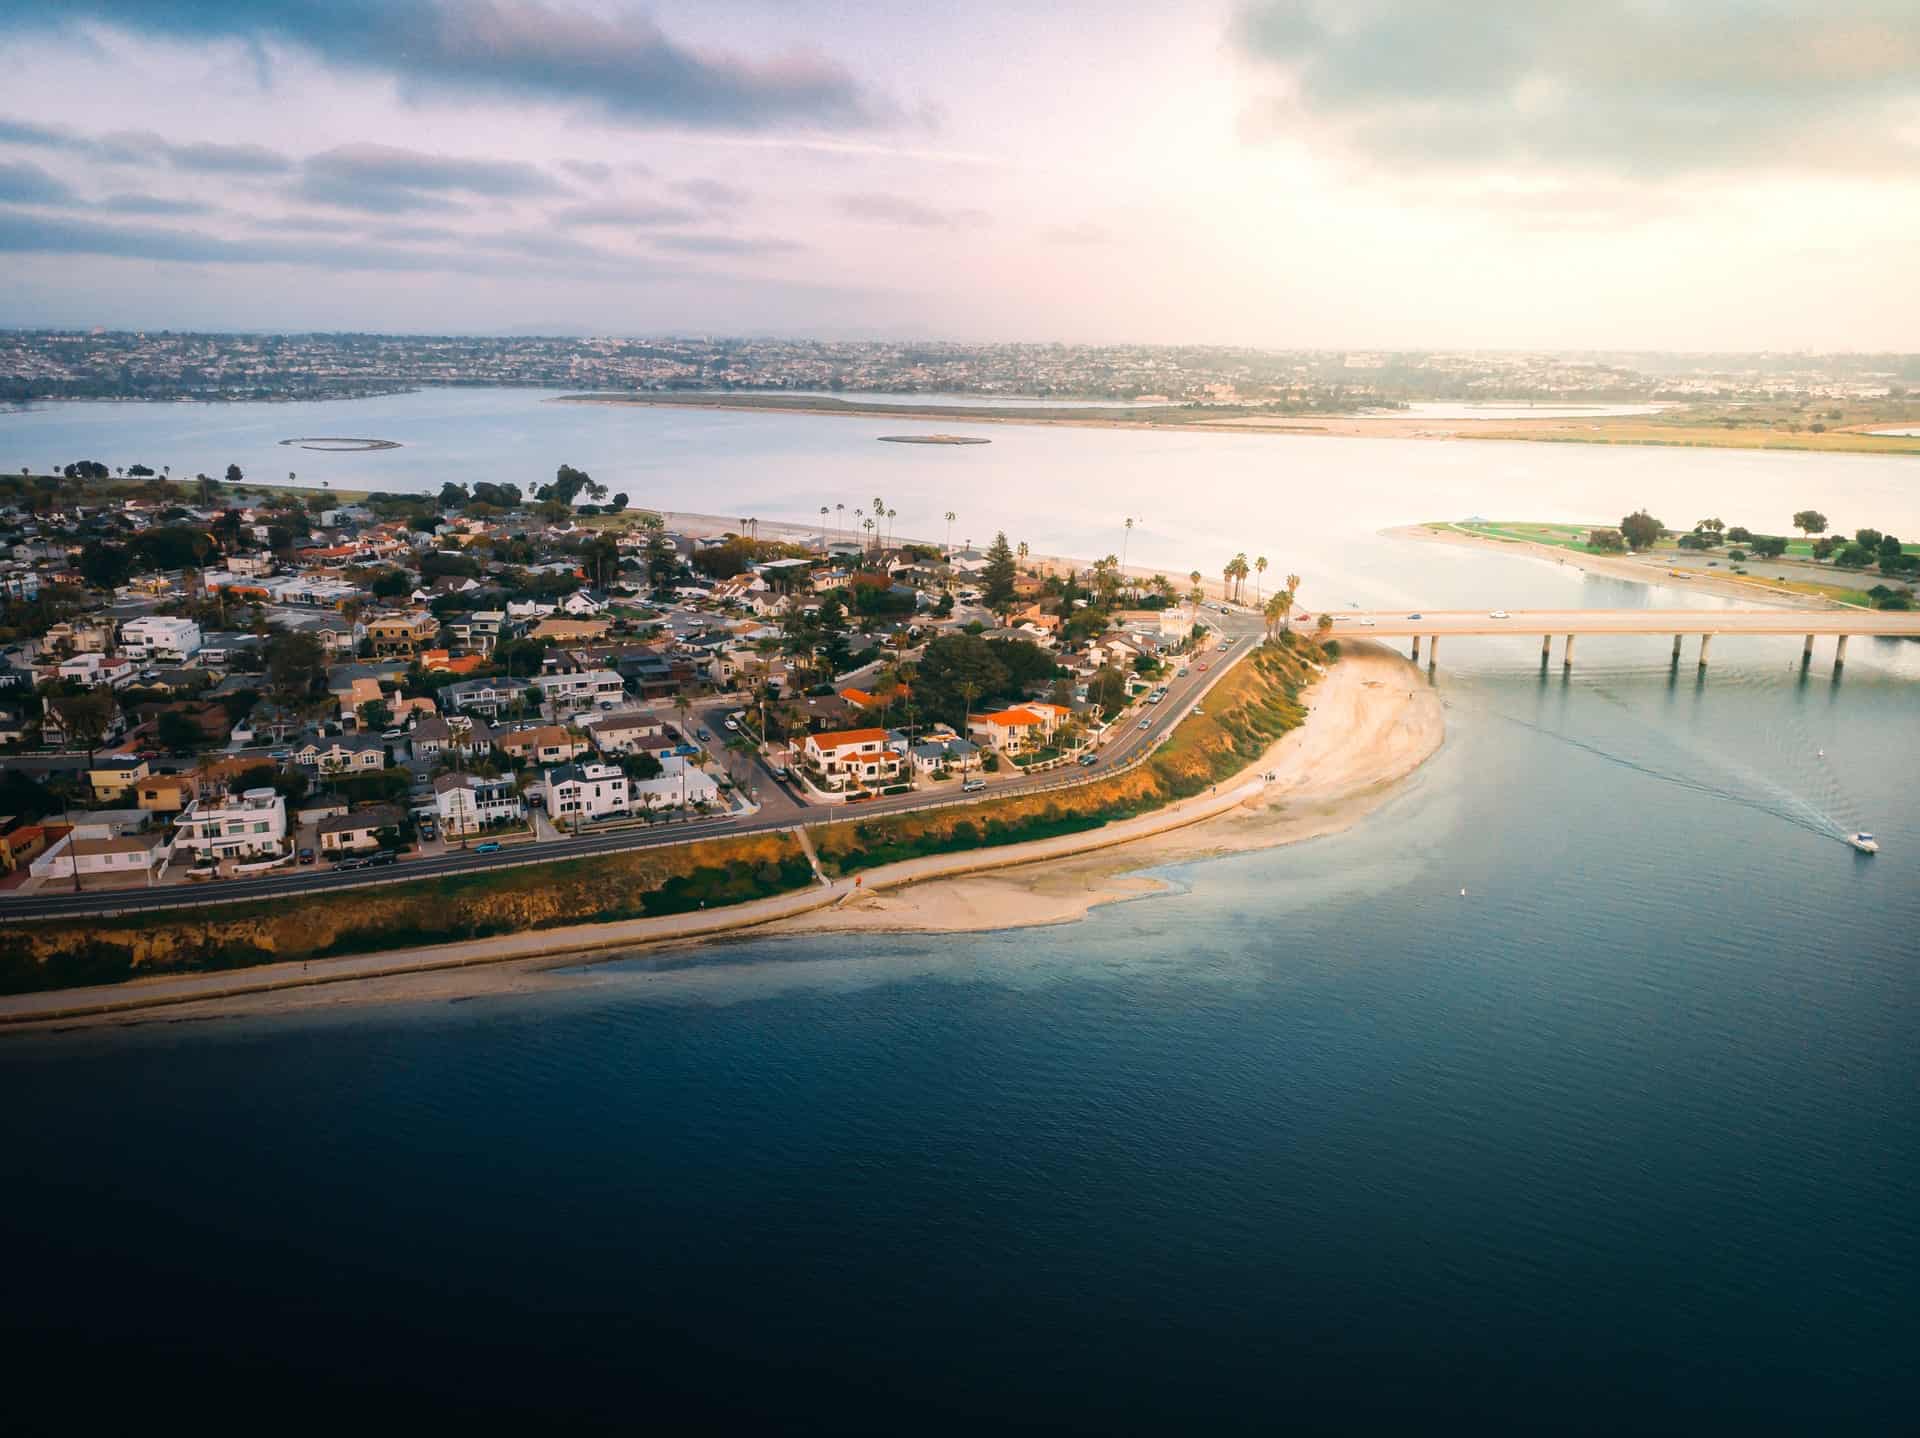 Best things to do in San Diego California - David Kelly - San Diego waterways by Adam Thomas on Unsplash